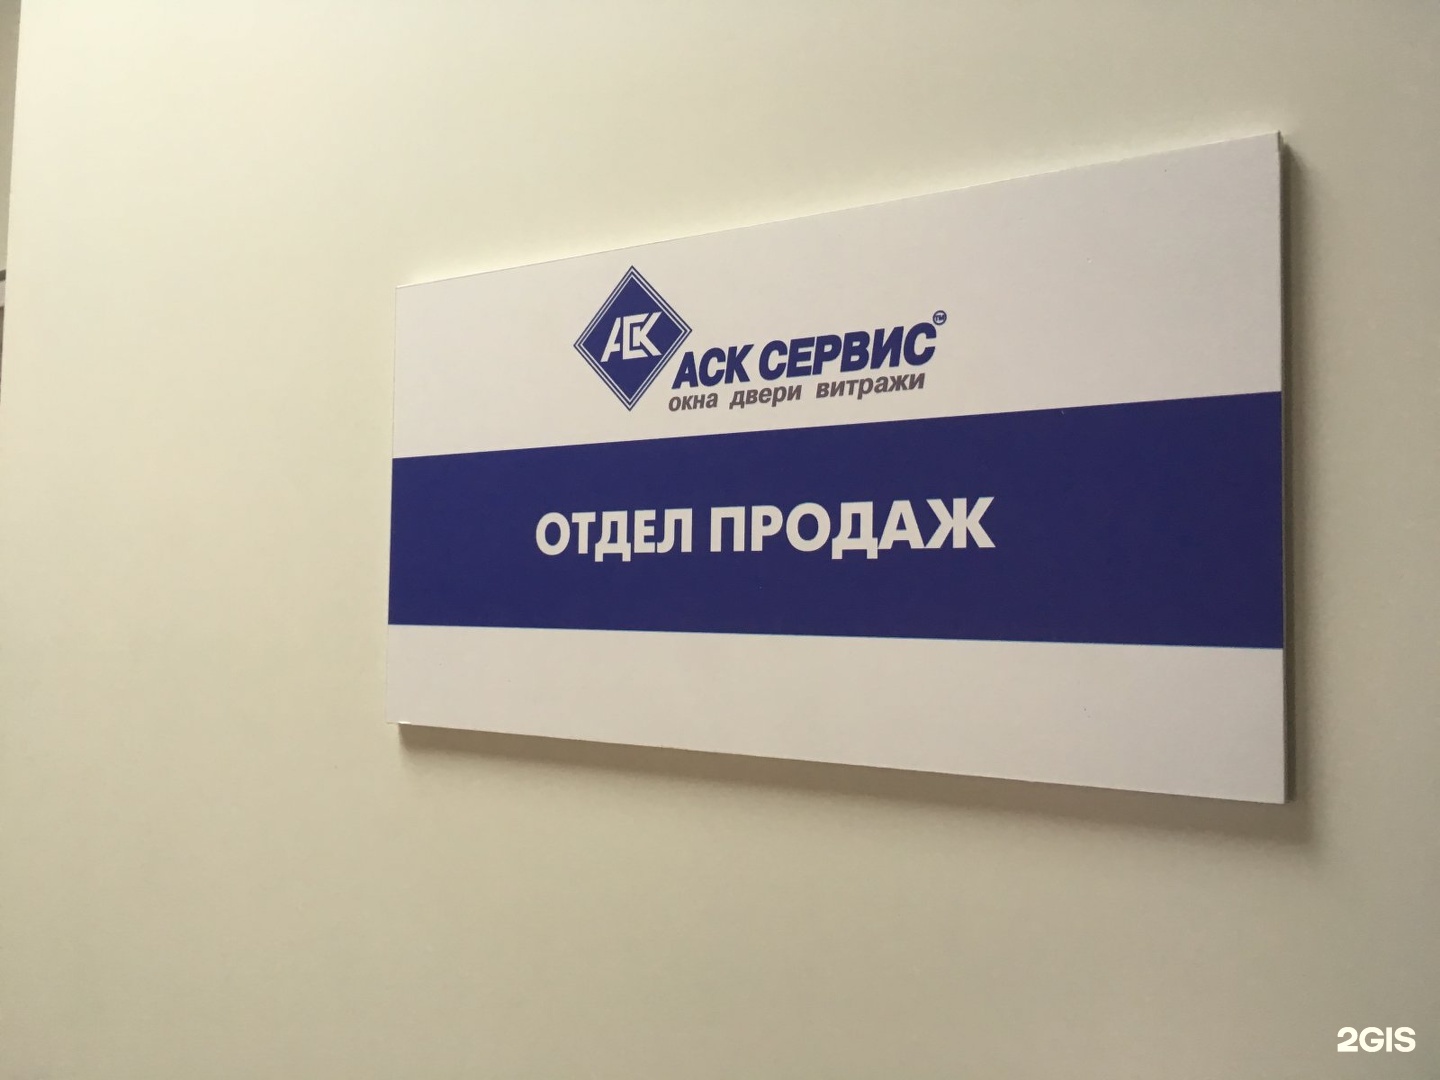 Производители окон новосибирск. АСК сервис. АСК сервис Новосибирск. АСК сервис кондиционеры. Логотип фото АСК.